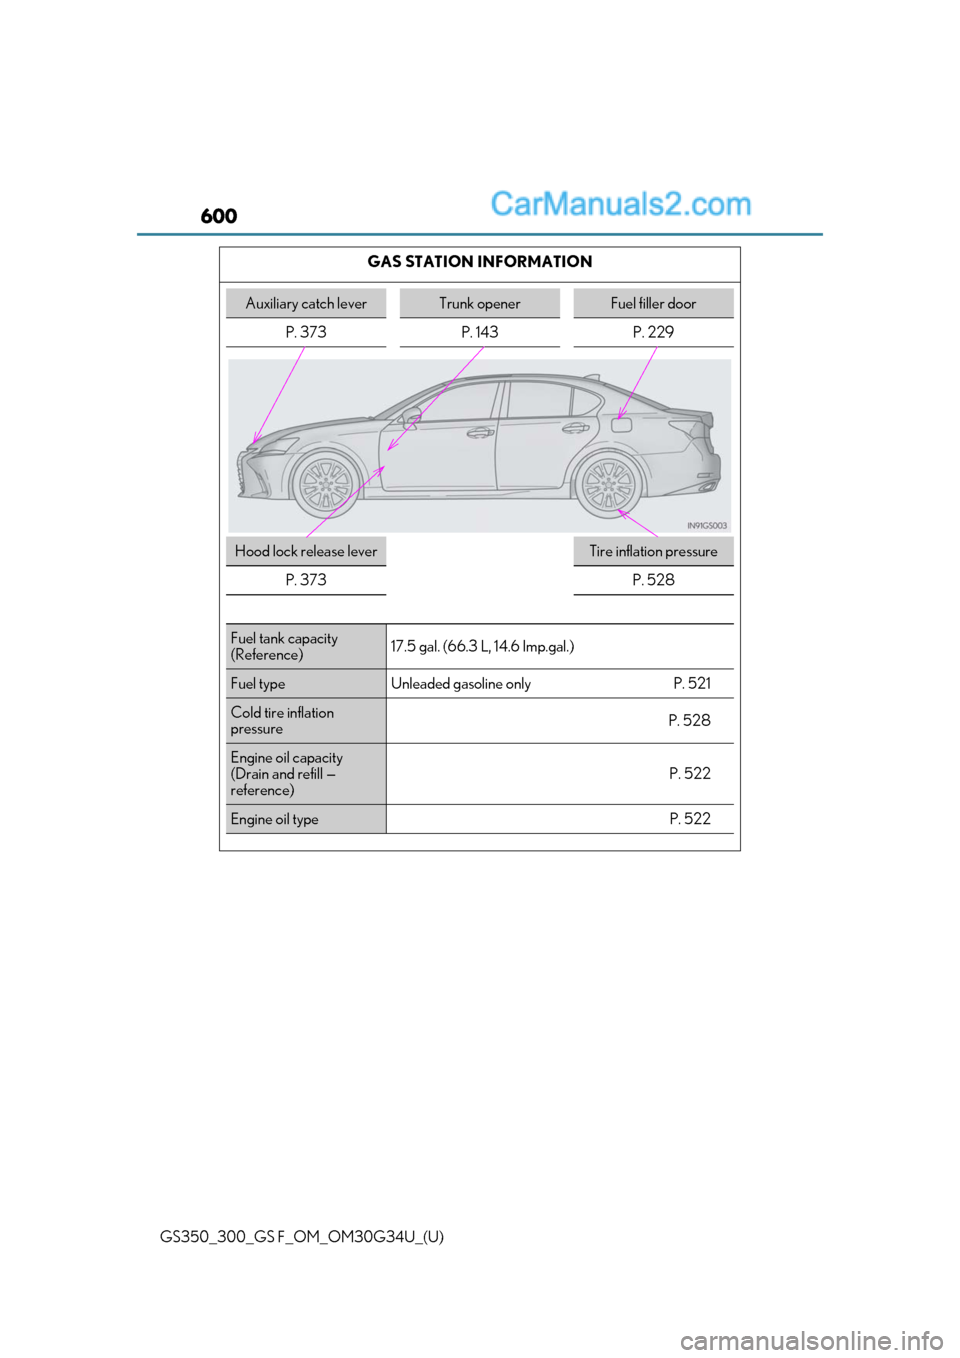 Lexus GS300 2018  Owners Manuals 600
GS350_300_GS F_OM_OM30G34U_(U)GAS STATION INFORMATION
Auxiliary catch leverTrunk openerFuel filler door
P. 373 P. 143 P. 229
Hood lock release leverTire inflation pressure
P. 373
P. 528
Fuel tank 